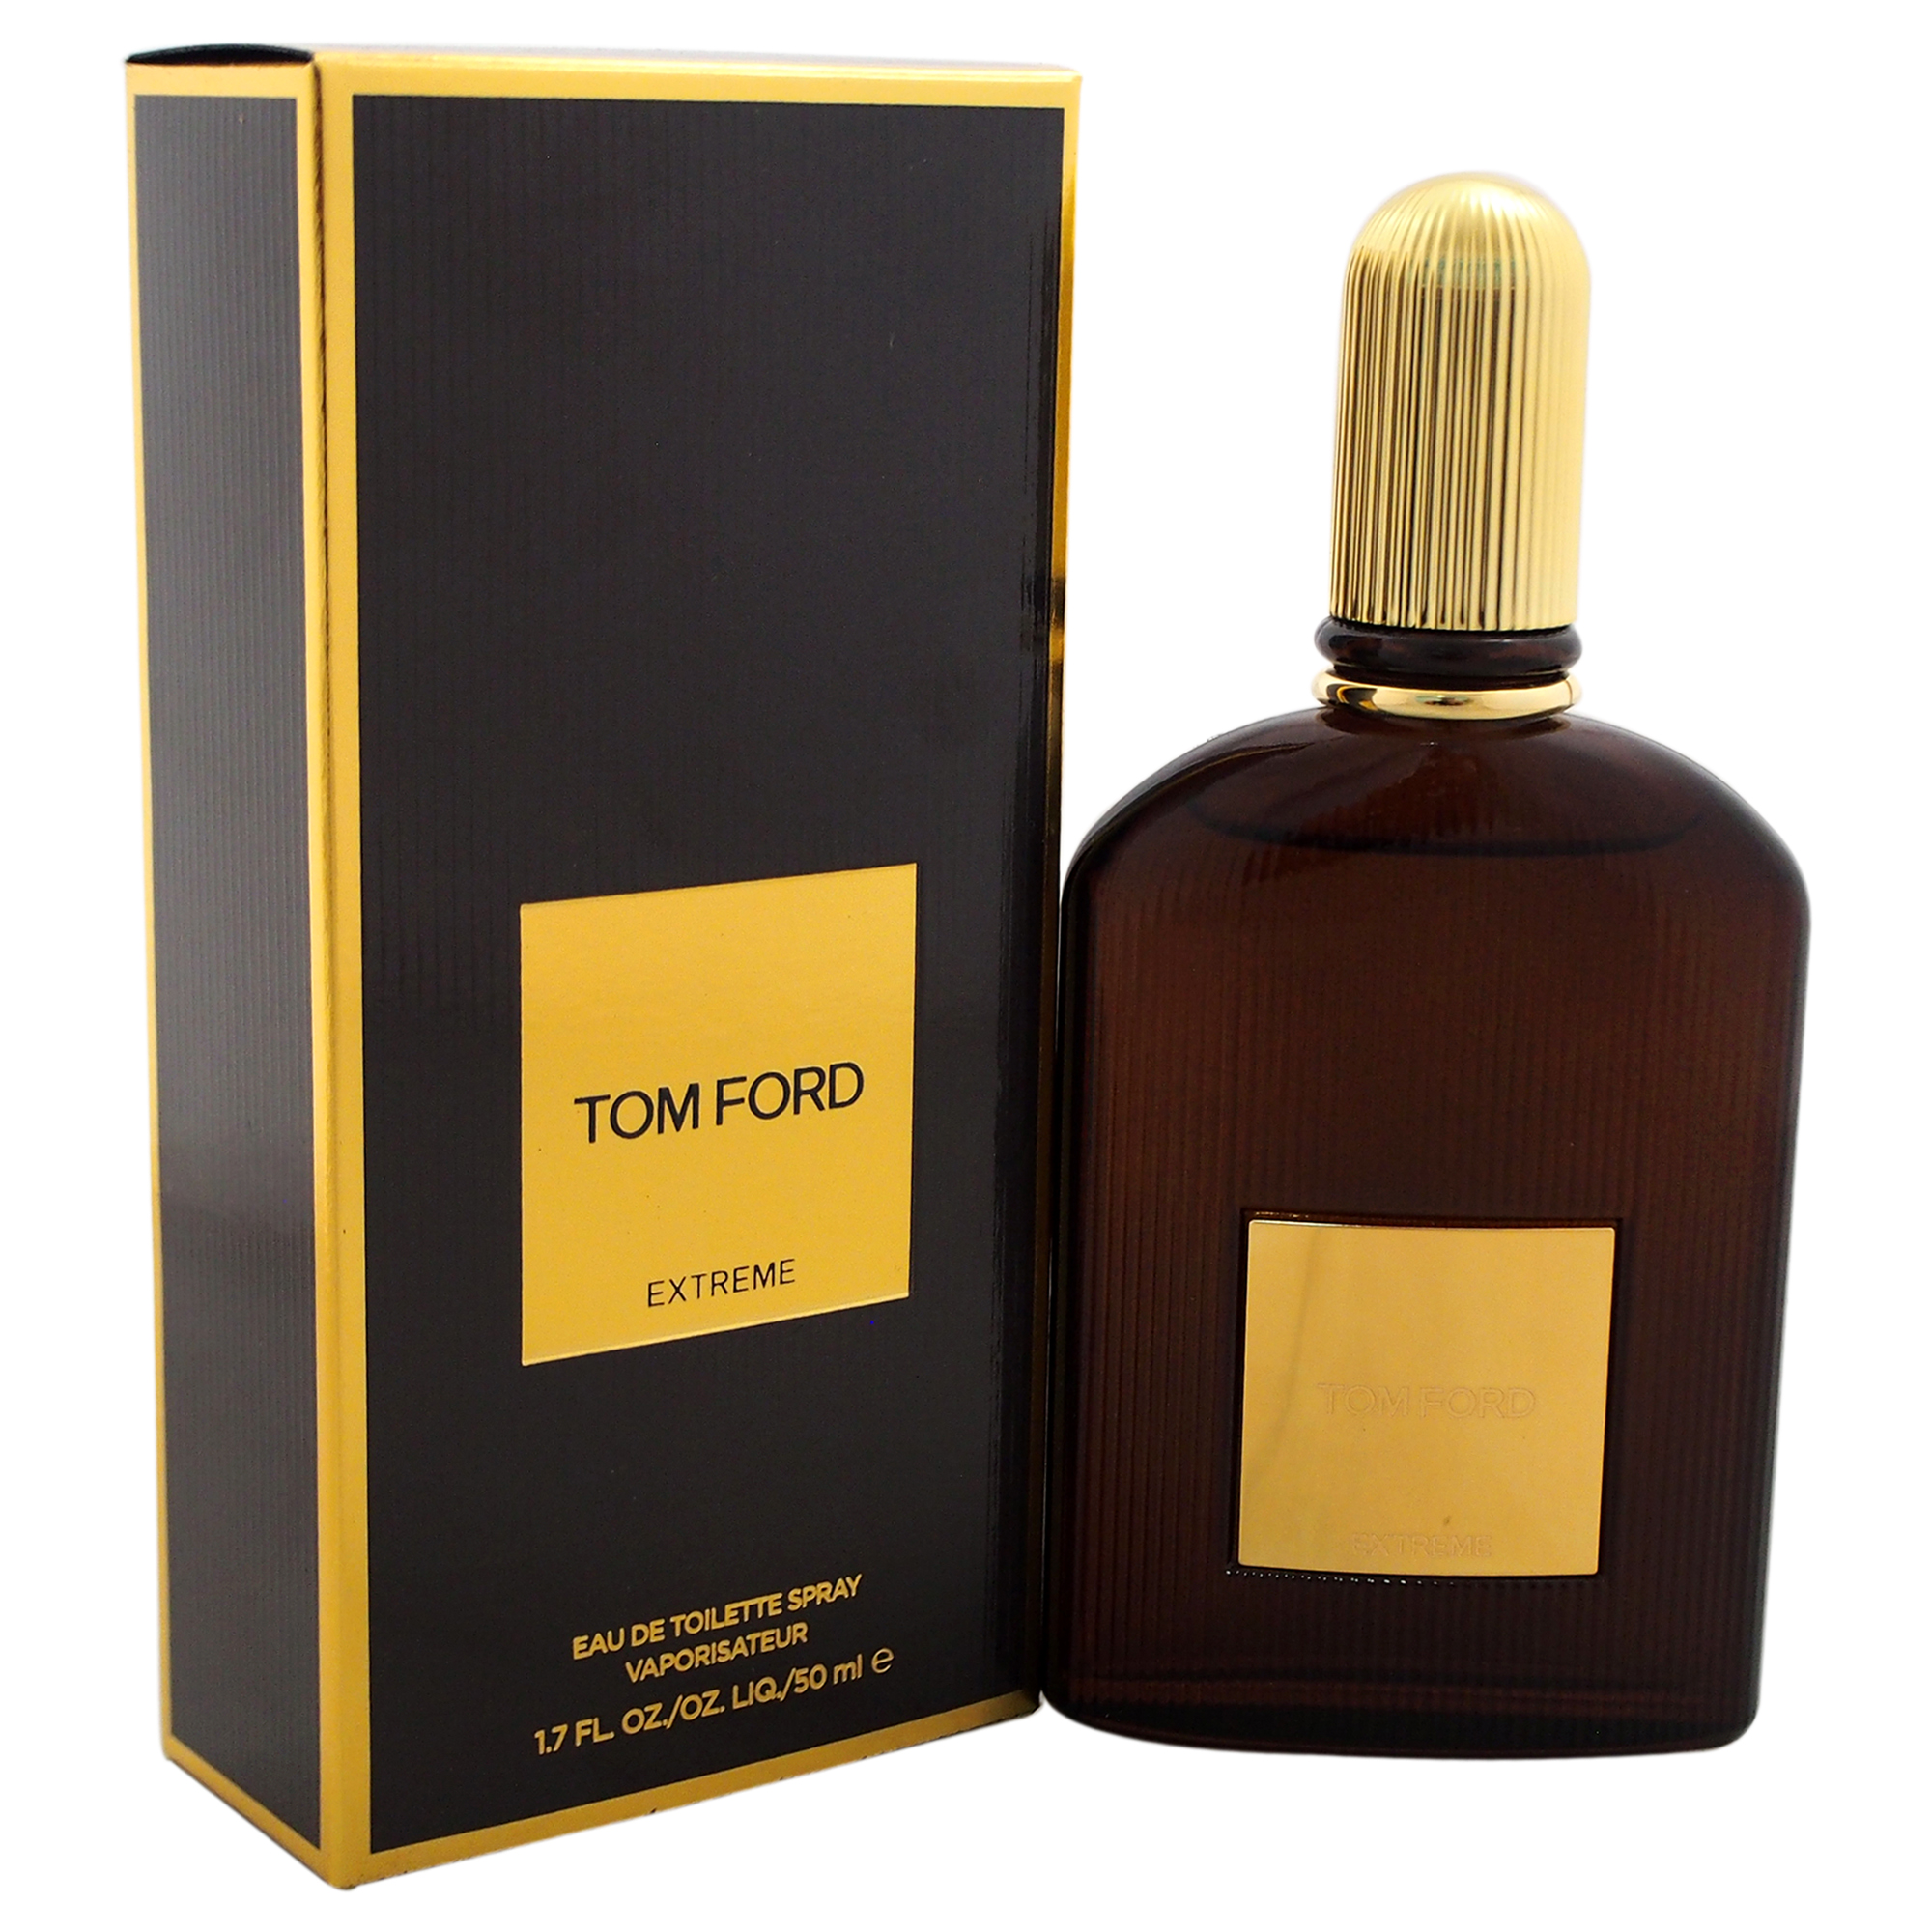 TOM FORD EXTREME by Tom Ford for Men - 1.7 oz EDT Spray